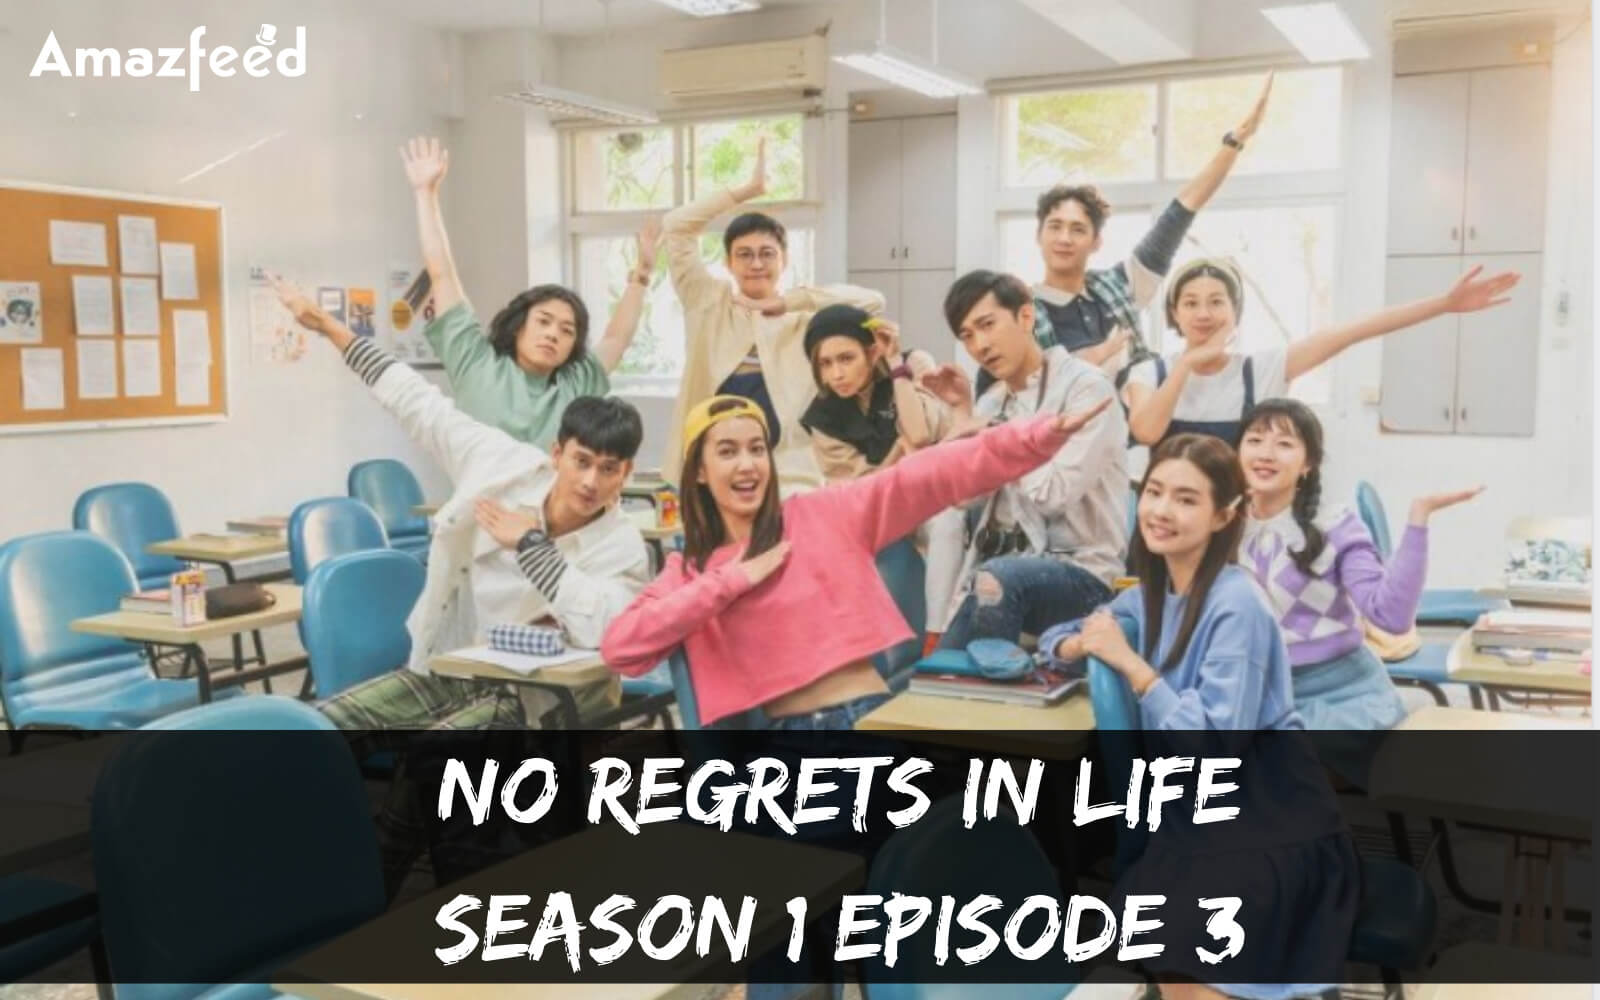 No Regrets In Life Season 1 Episode 3 release date